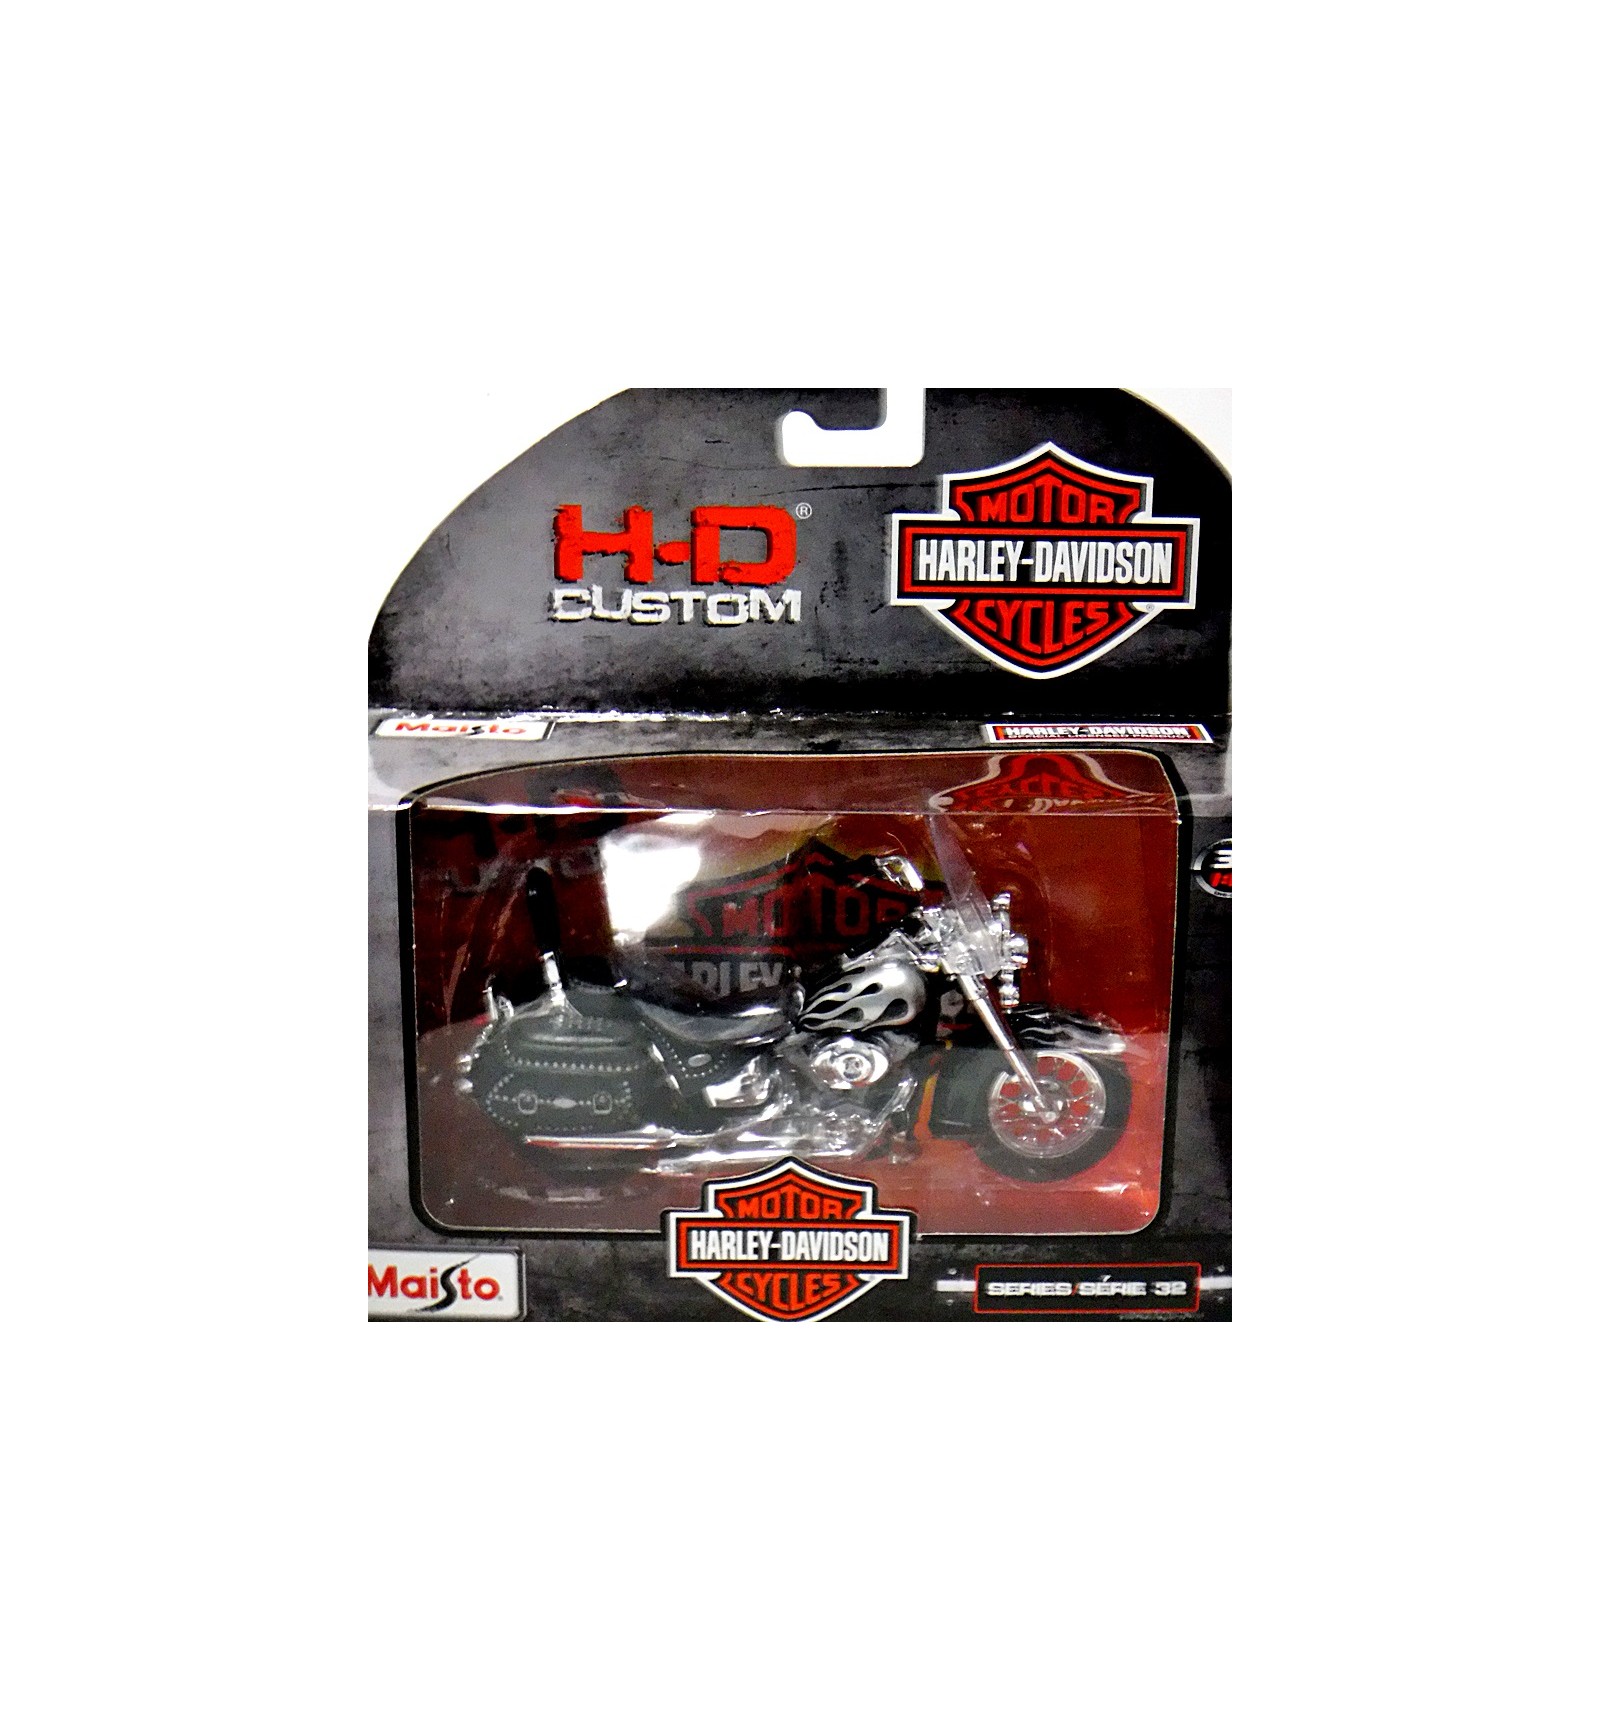 Maisto Harley Davidson Series 32 2002 Flstc Heritage Softail Classic Global Diecast Direct